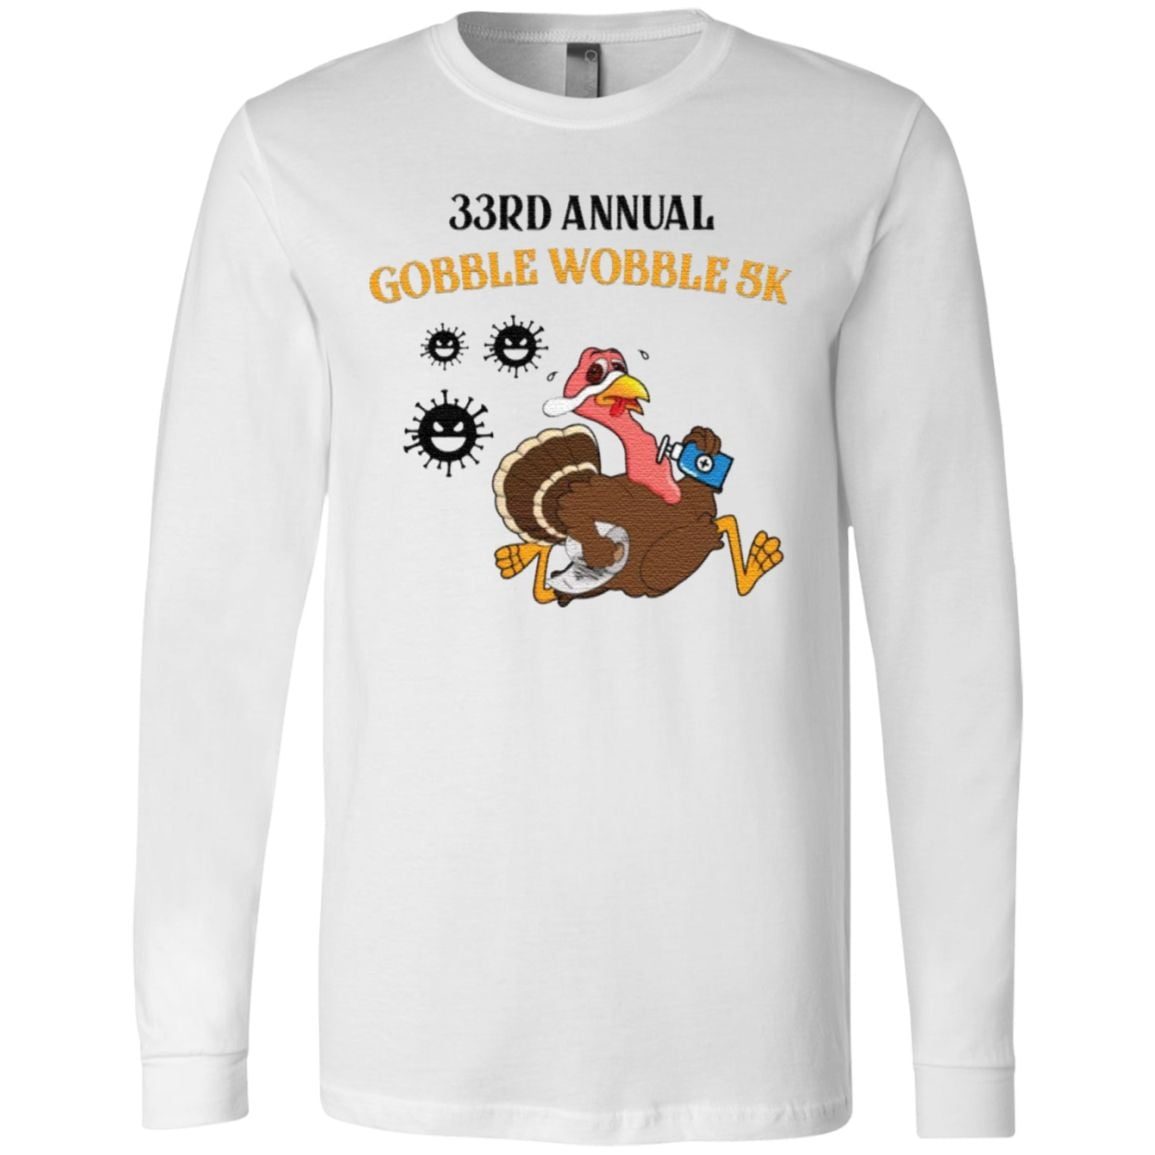 33rd Annual Gobble Wobble 5k shirt